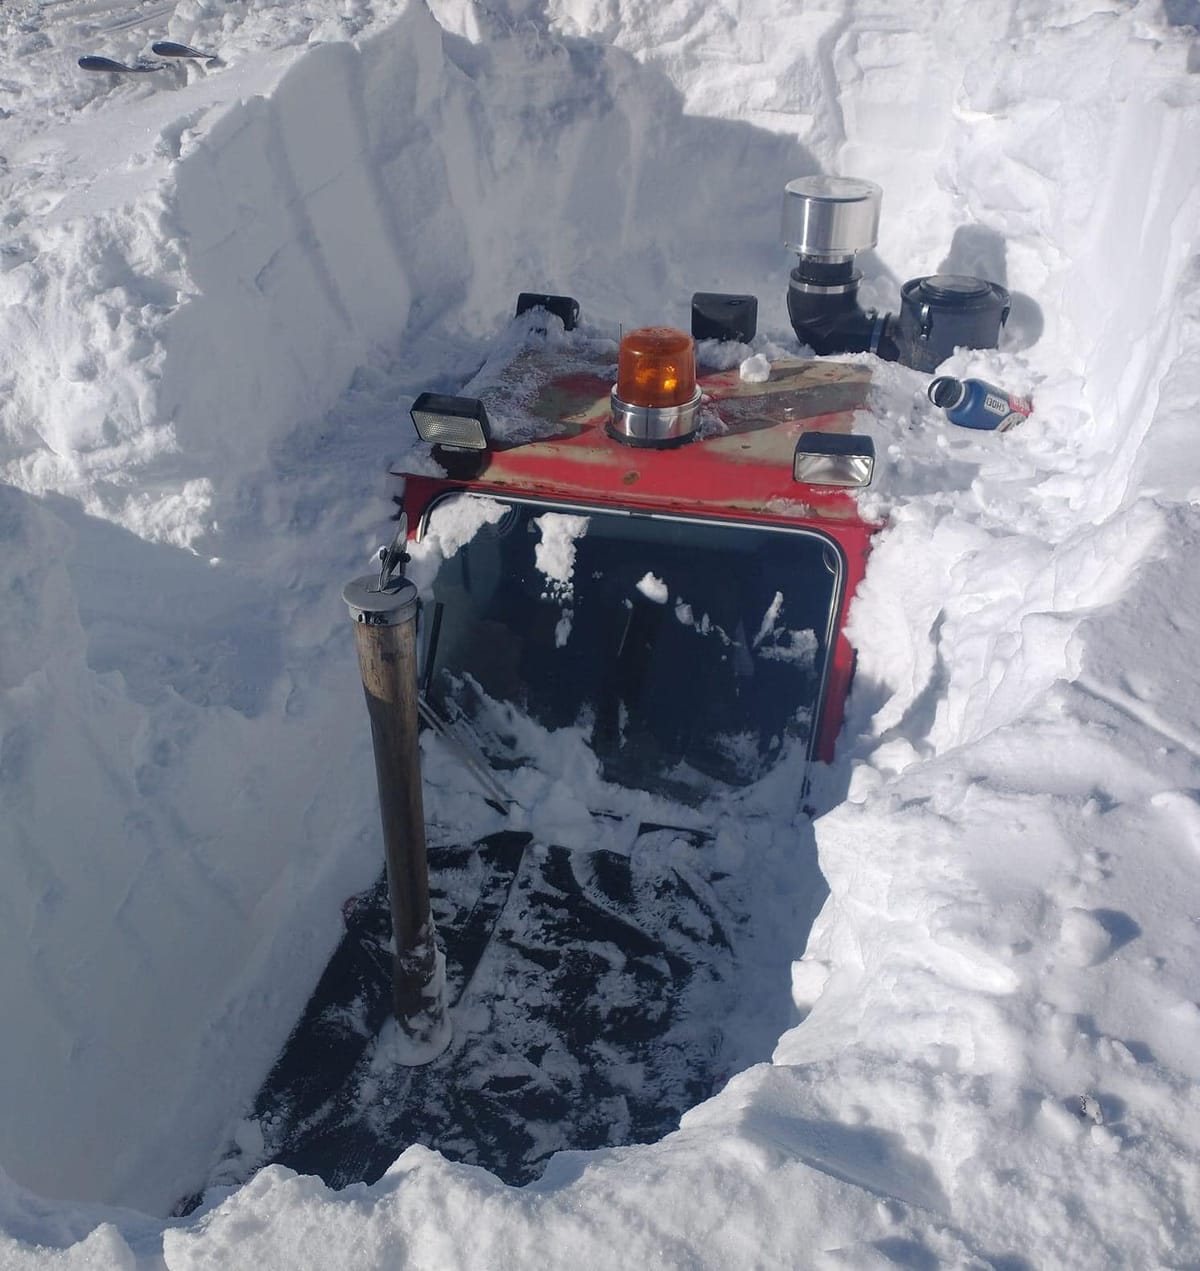 Colorado Resort Dig Up Buried Snowcat